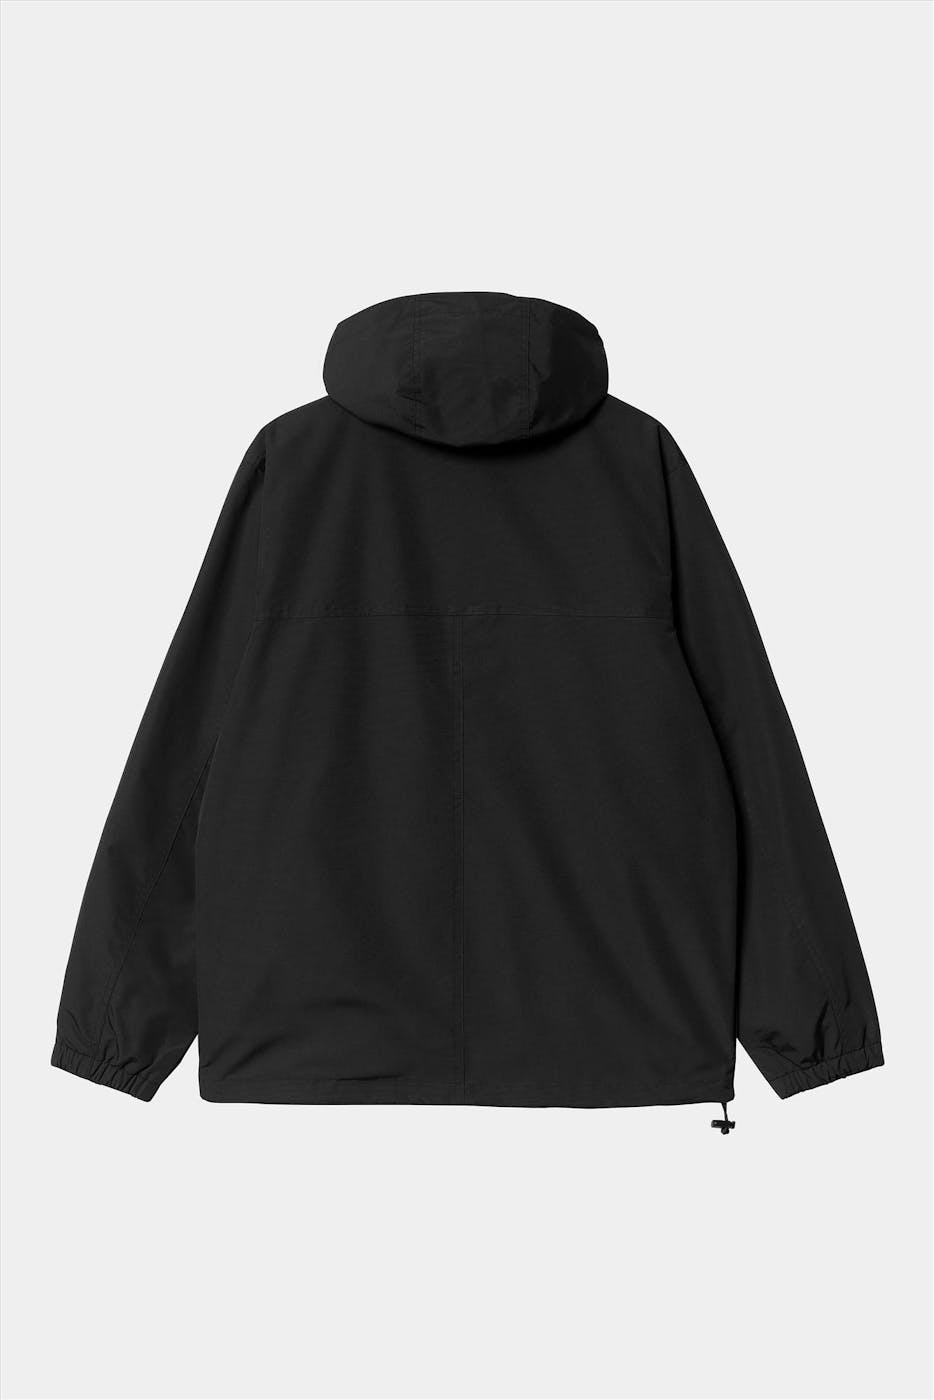 Carhartt WIP - Zwarte Windbreaker Pullover jas